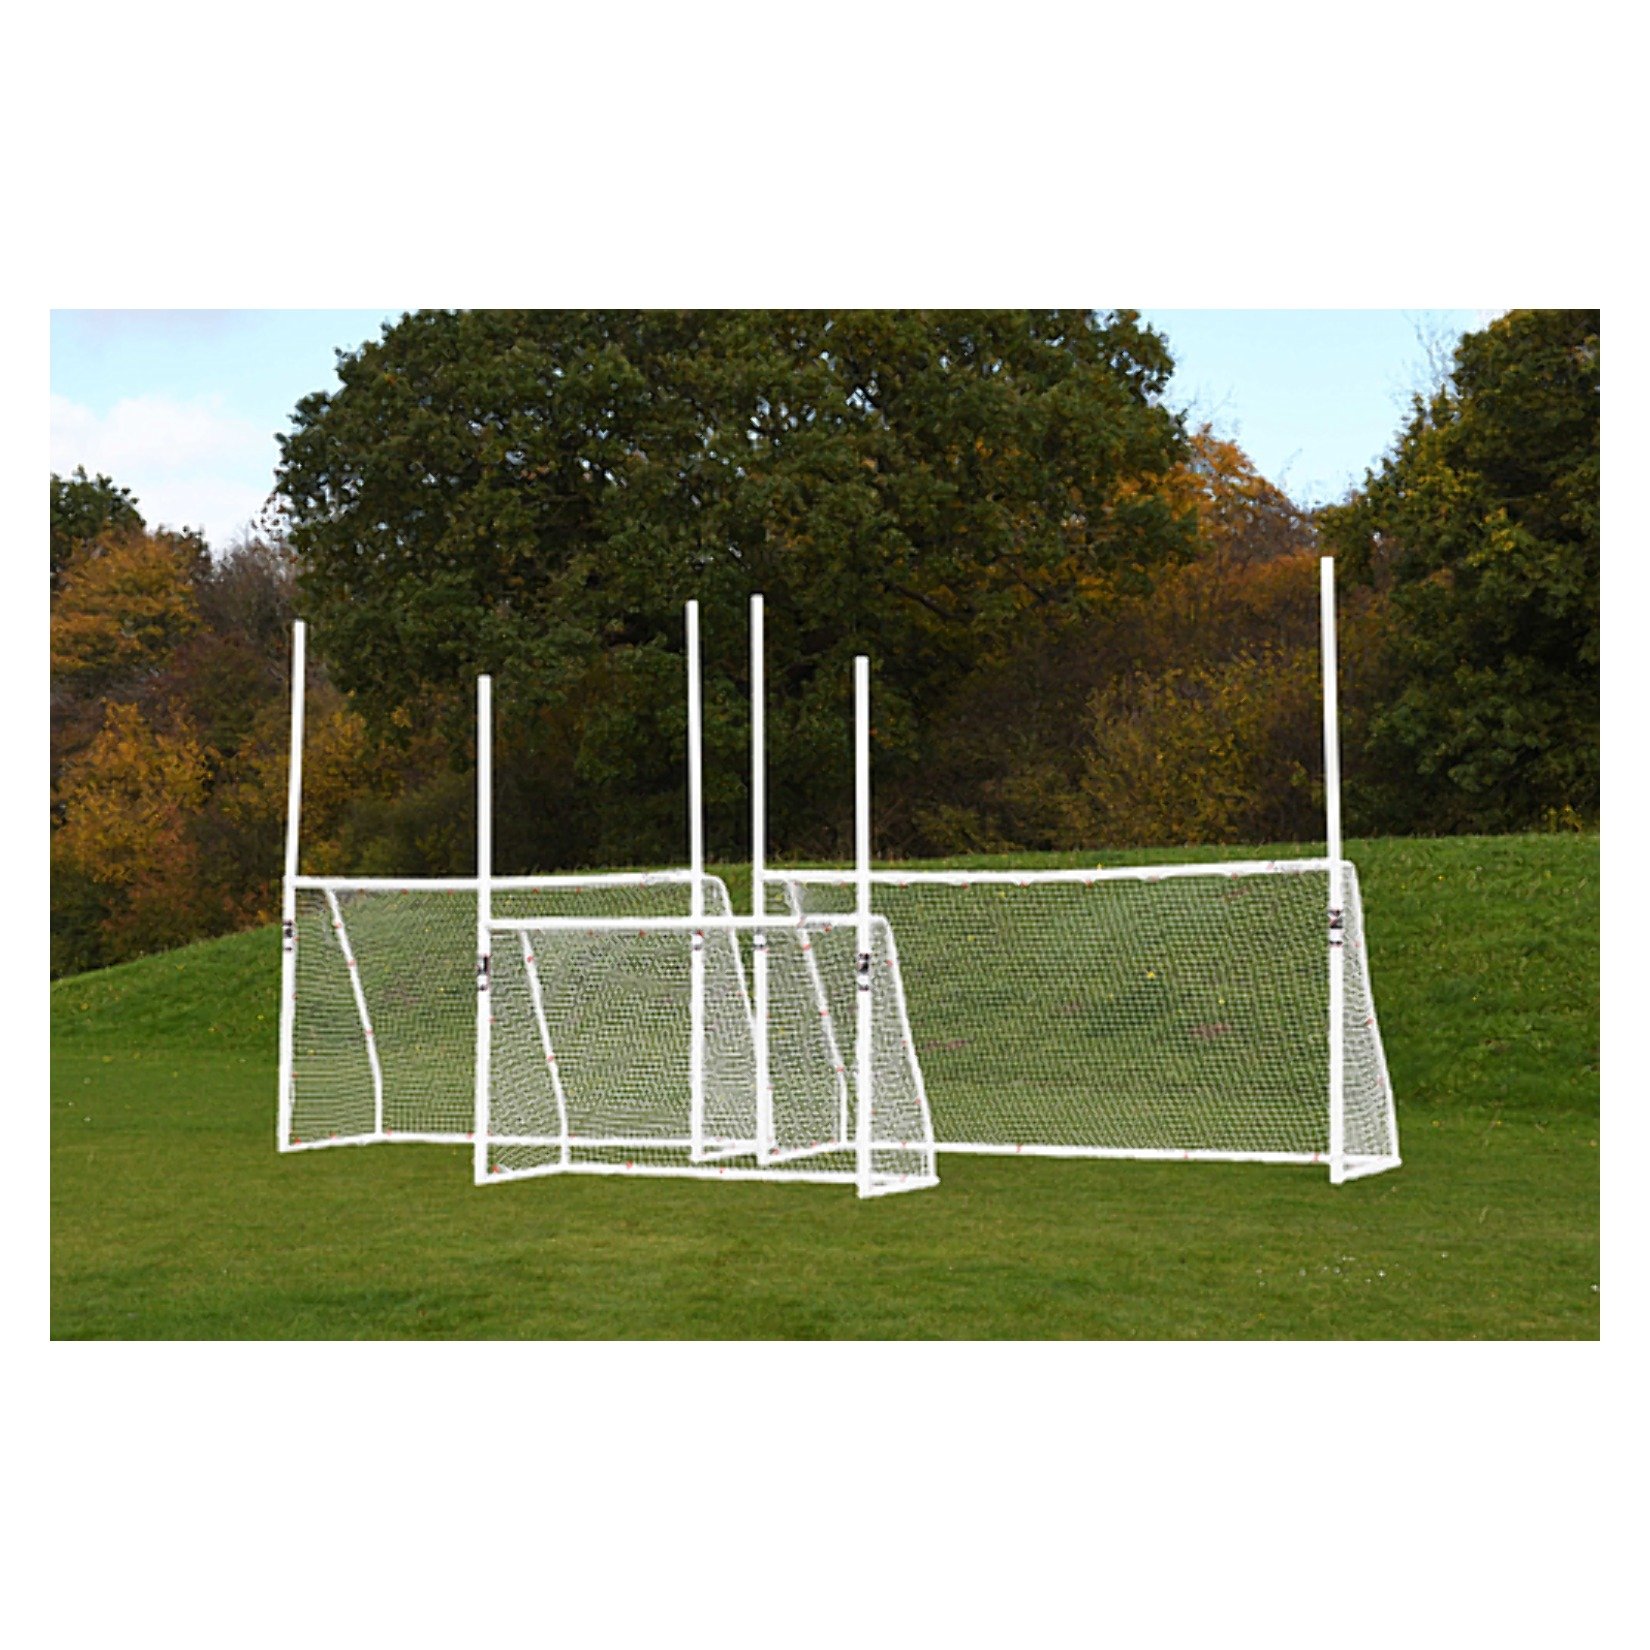 Precision GAA Match Goal Posts 12ft x 6ft